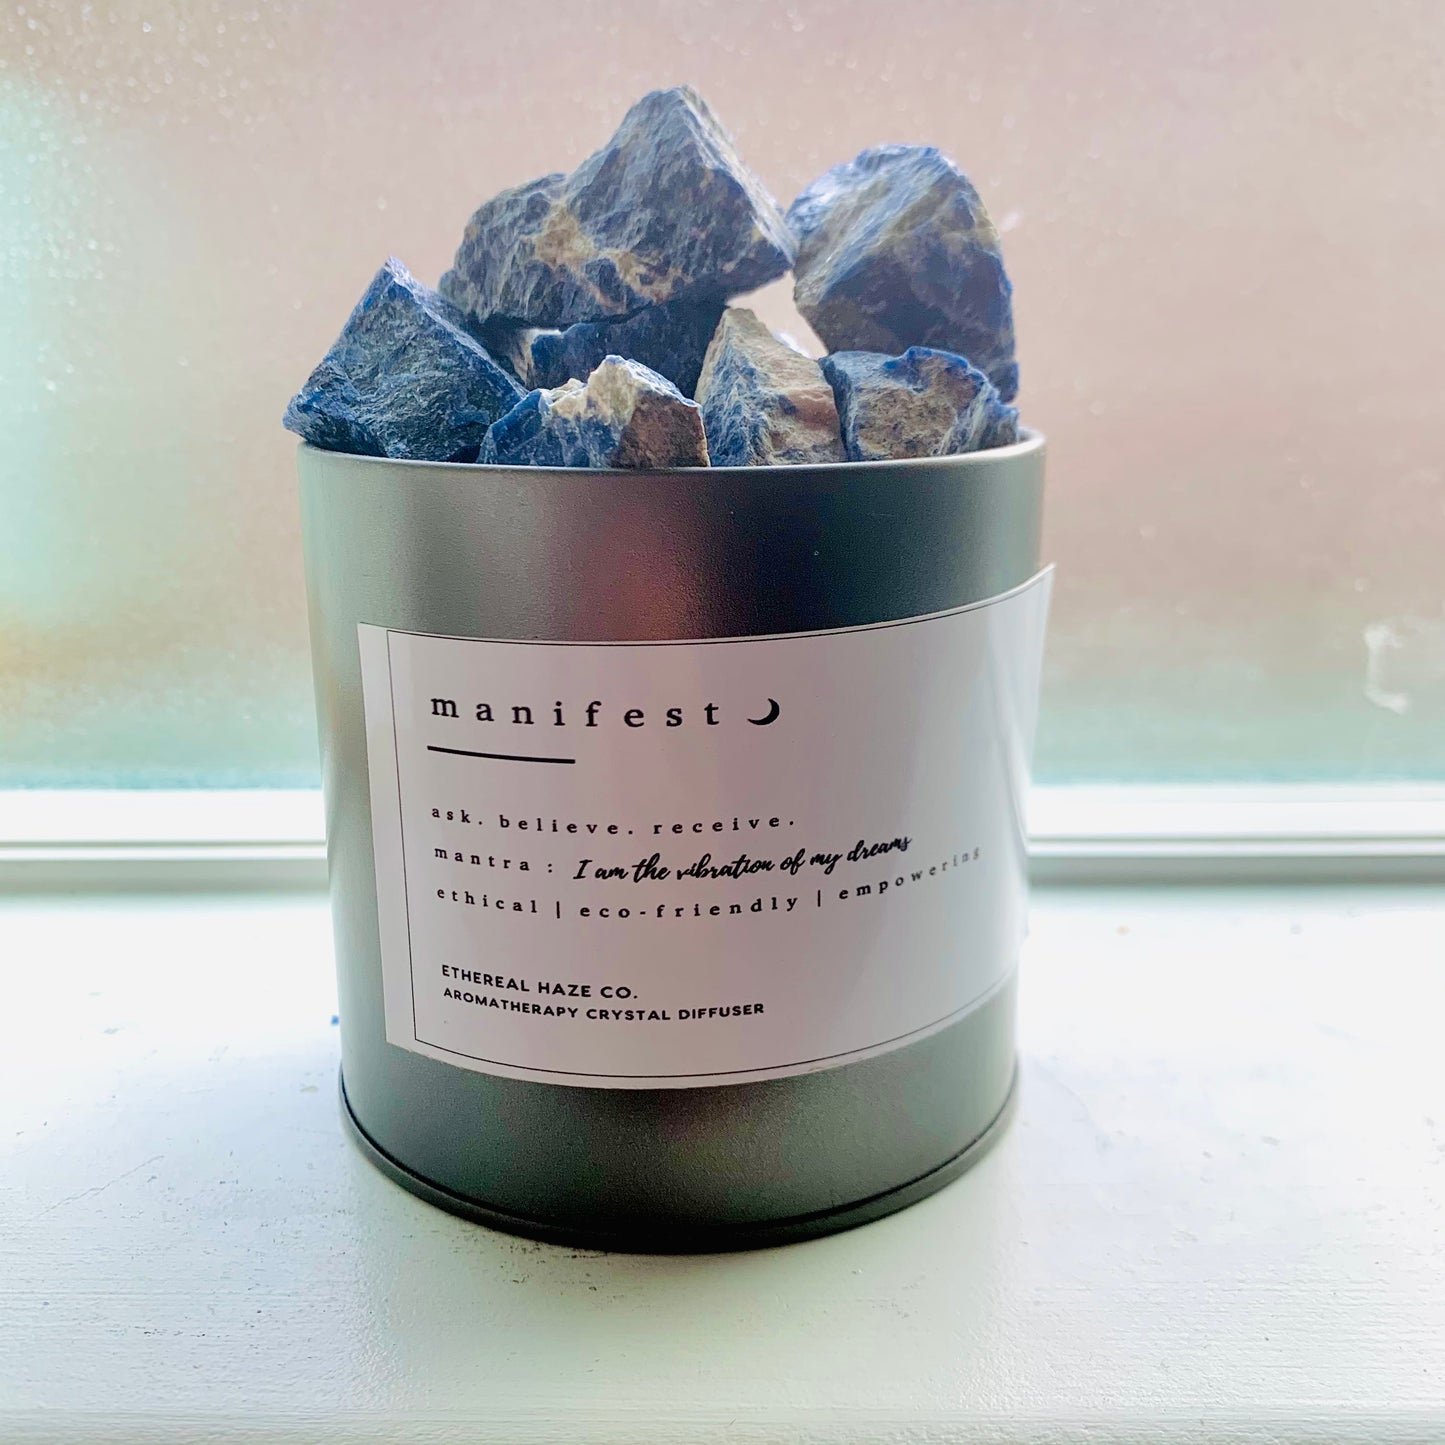 "MANIFEST" Sodalite Aromatherapy Diffuser - Ethereal Haze